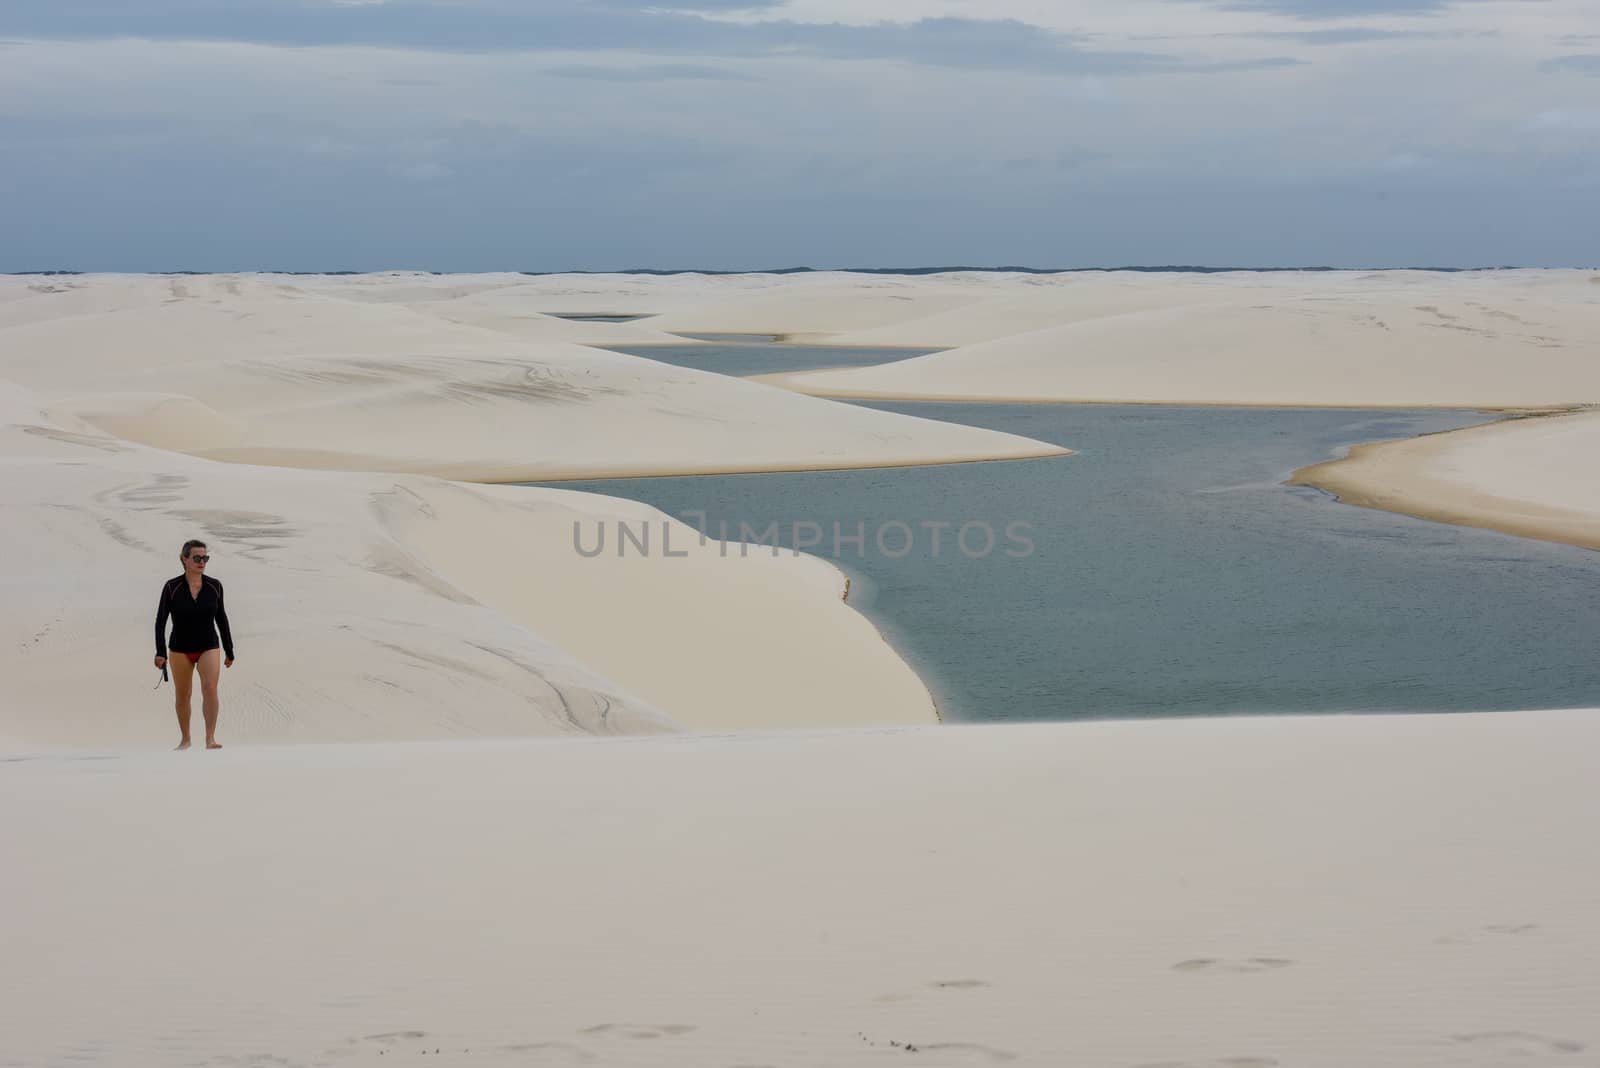 Atins, Brazil - 12 January 2019: woman walking on the dunes at Lencois Maranhenese National Park in Brazil